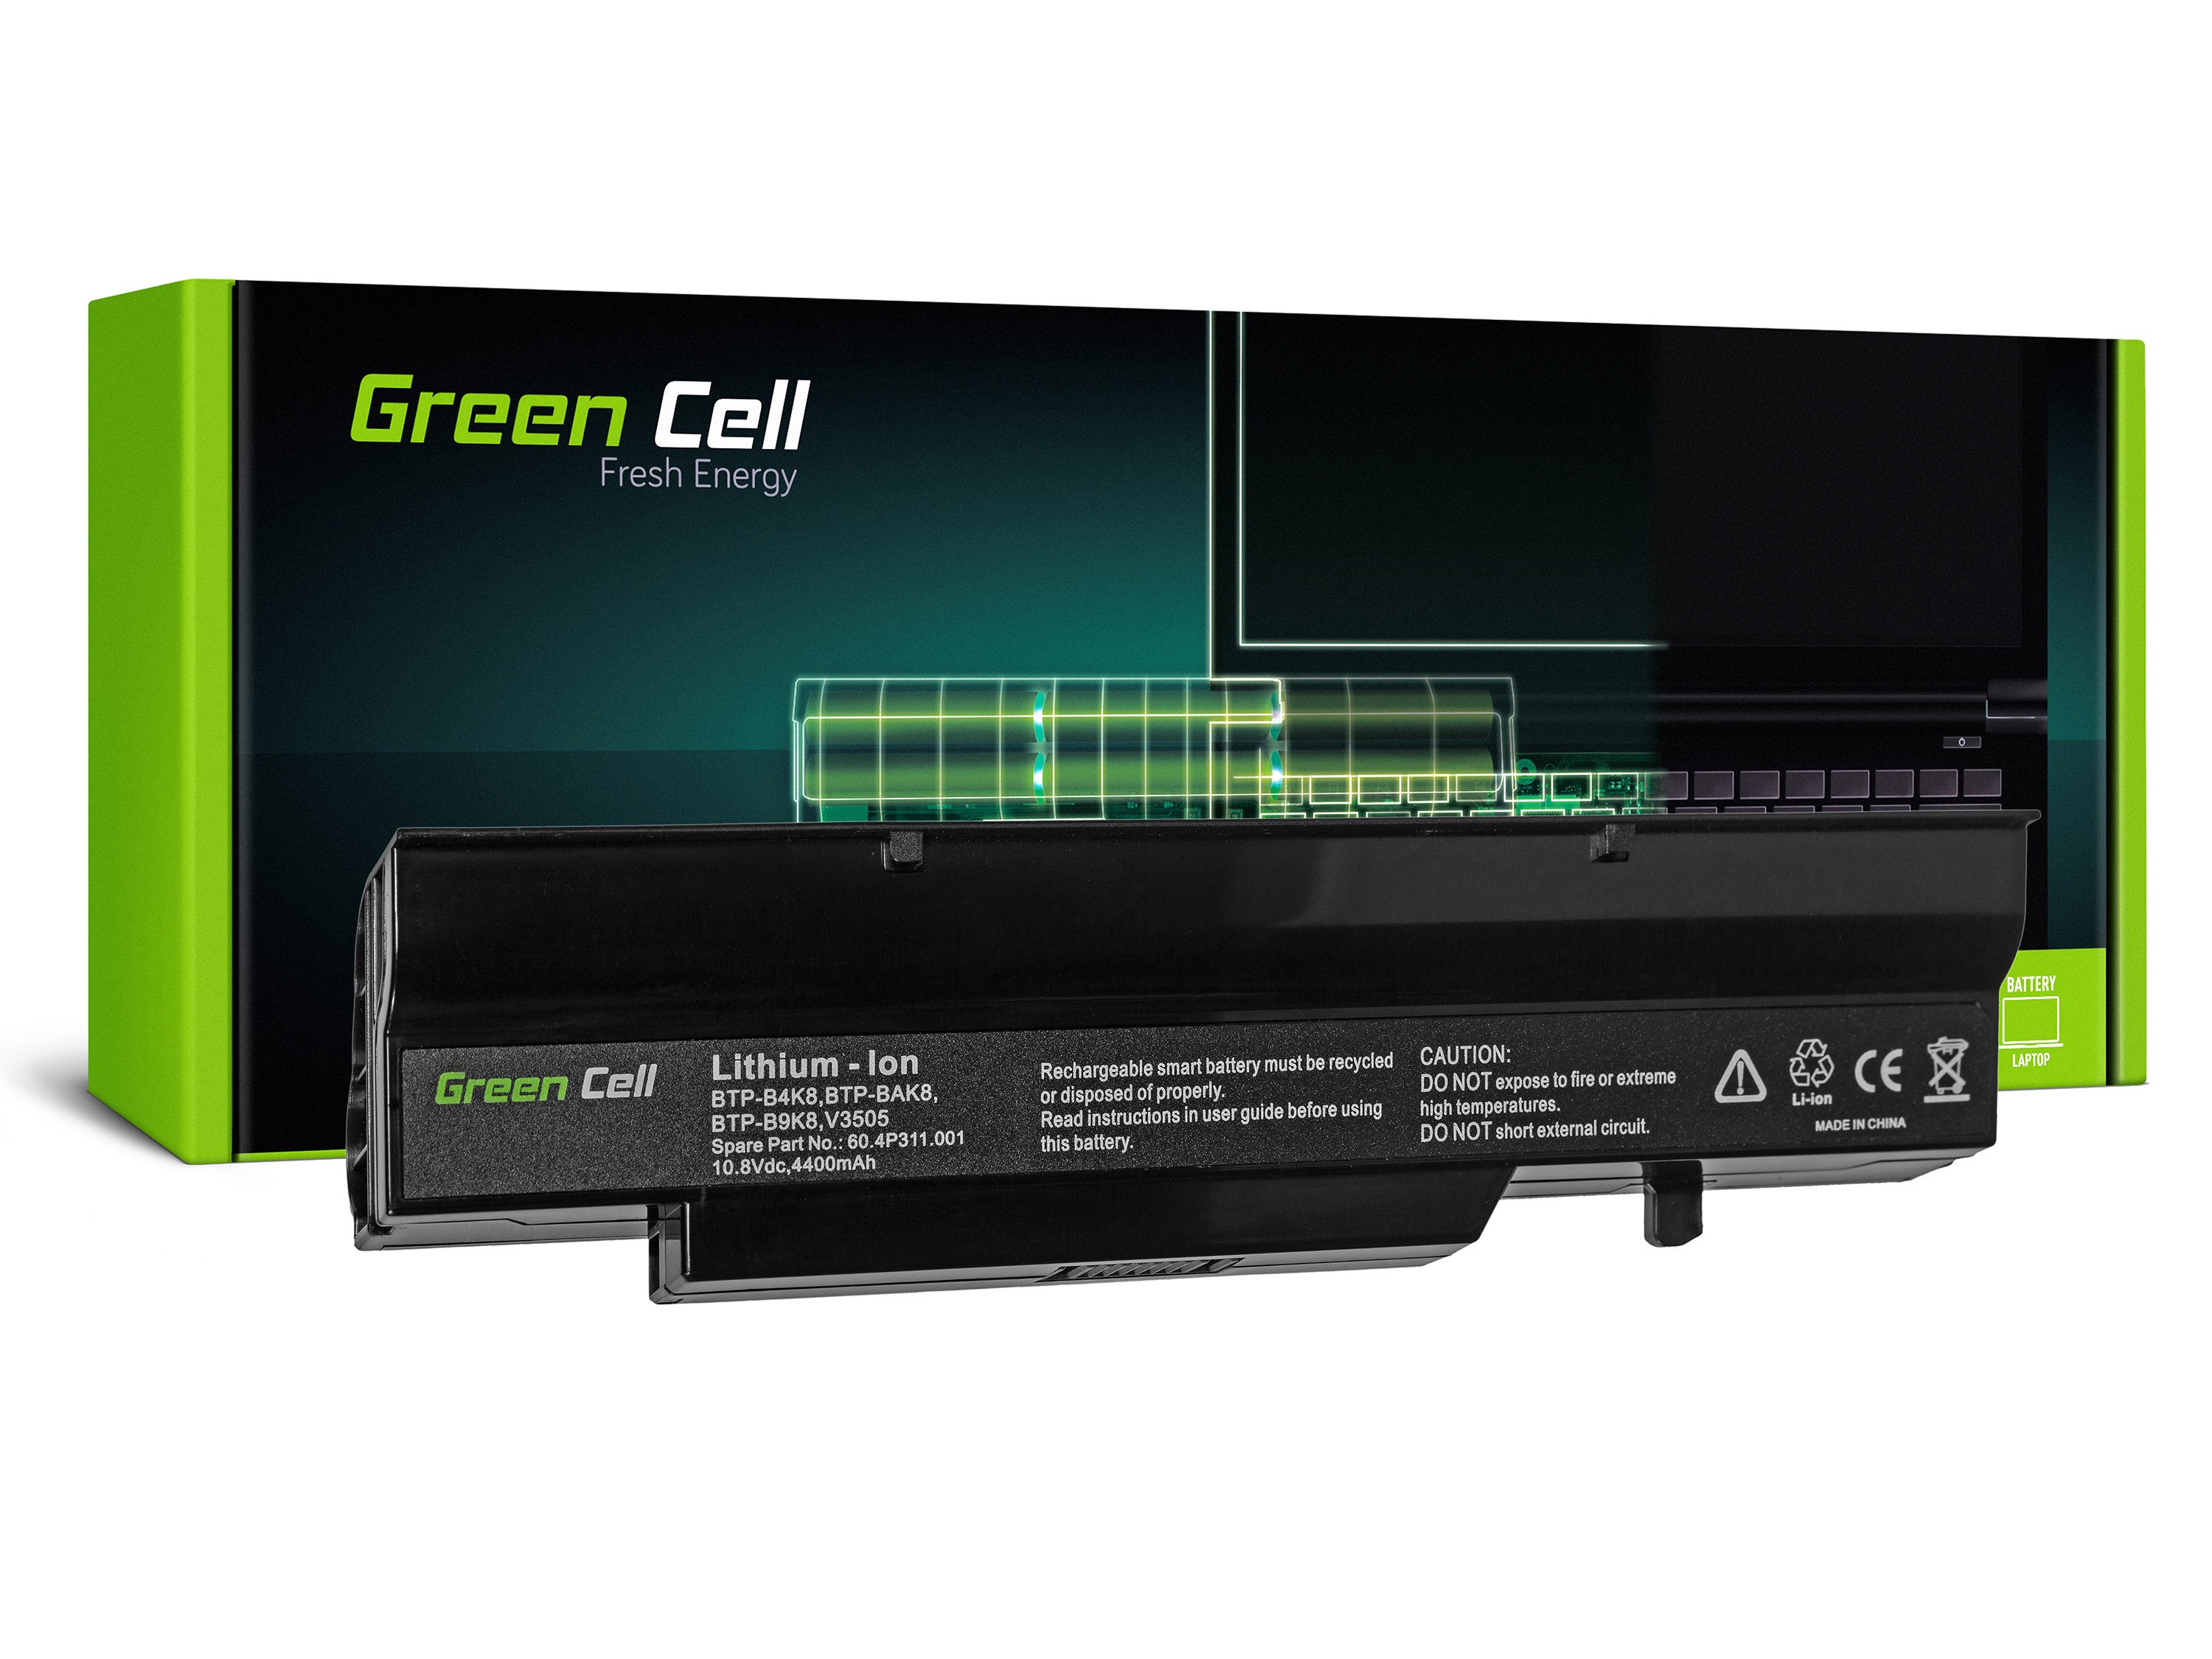 GREEN CELL Laptop Battery for Fujitsu-Siemens Esprimo V5505 V6505 - 11.1V - 4400mAh